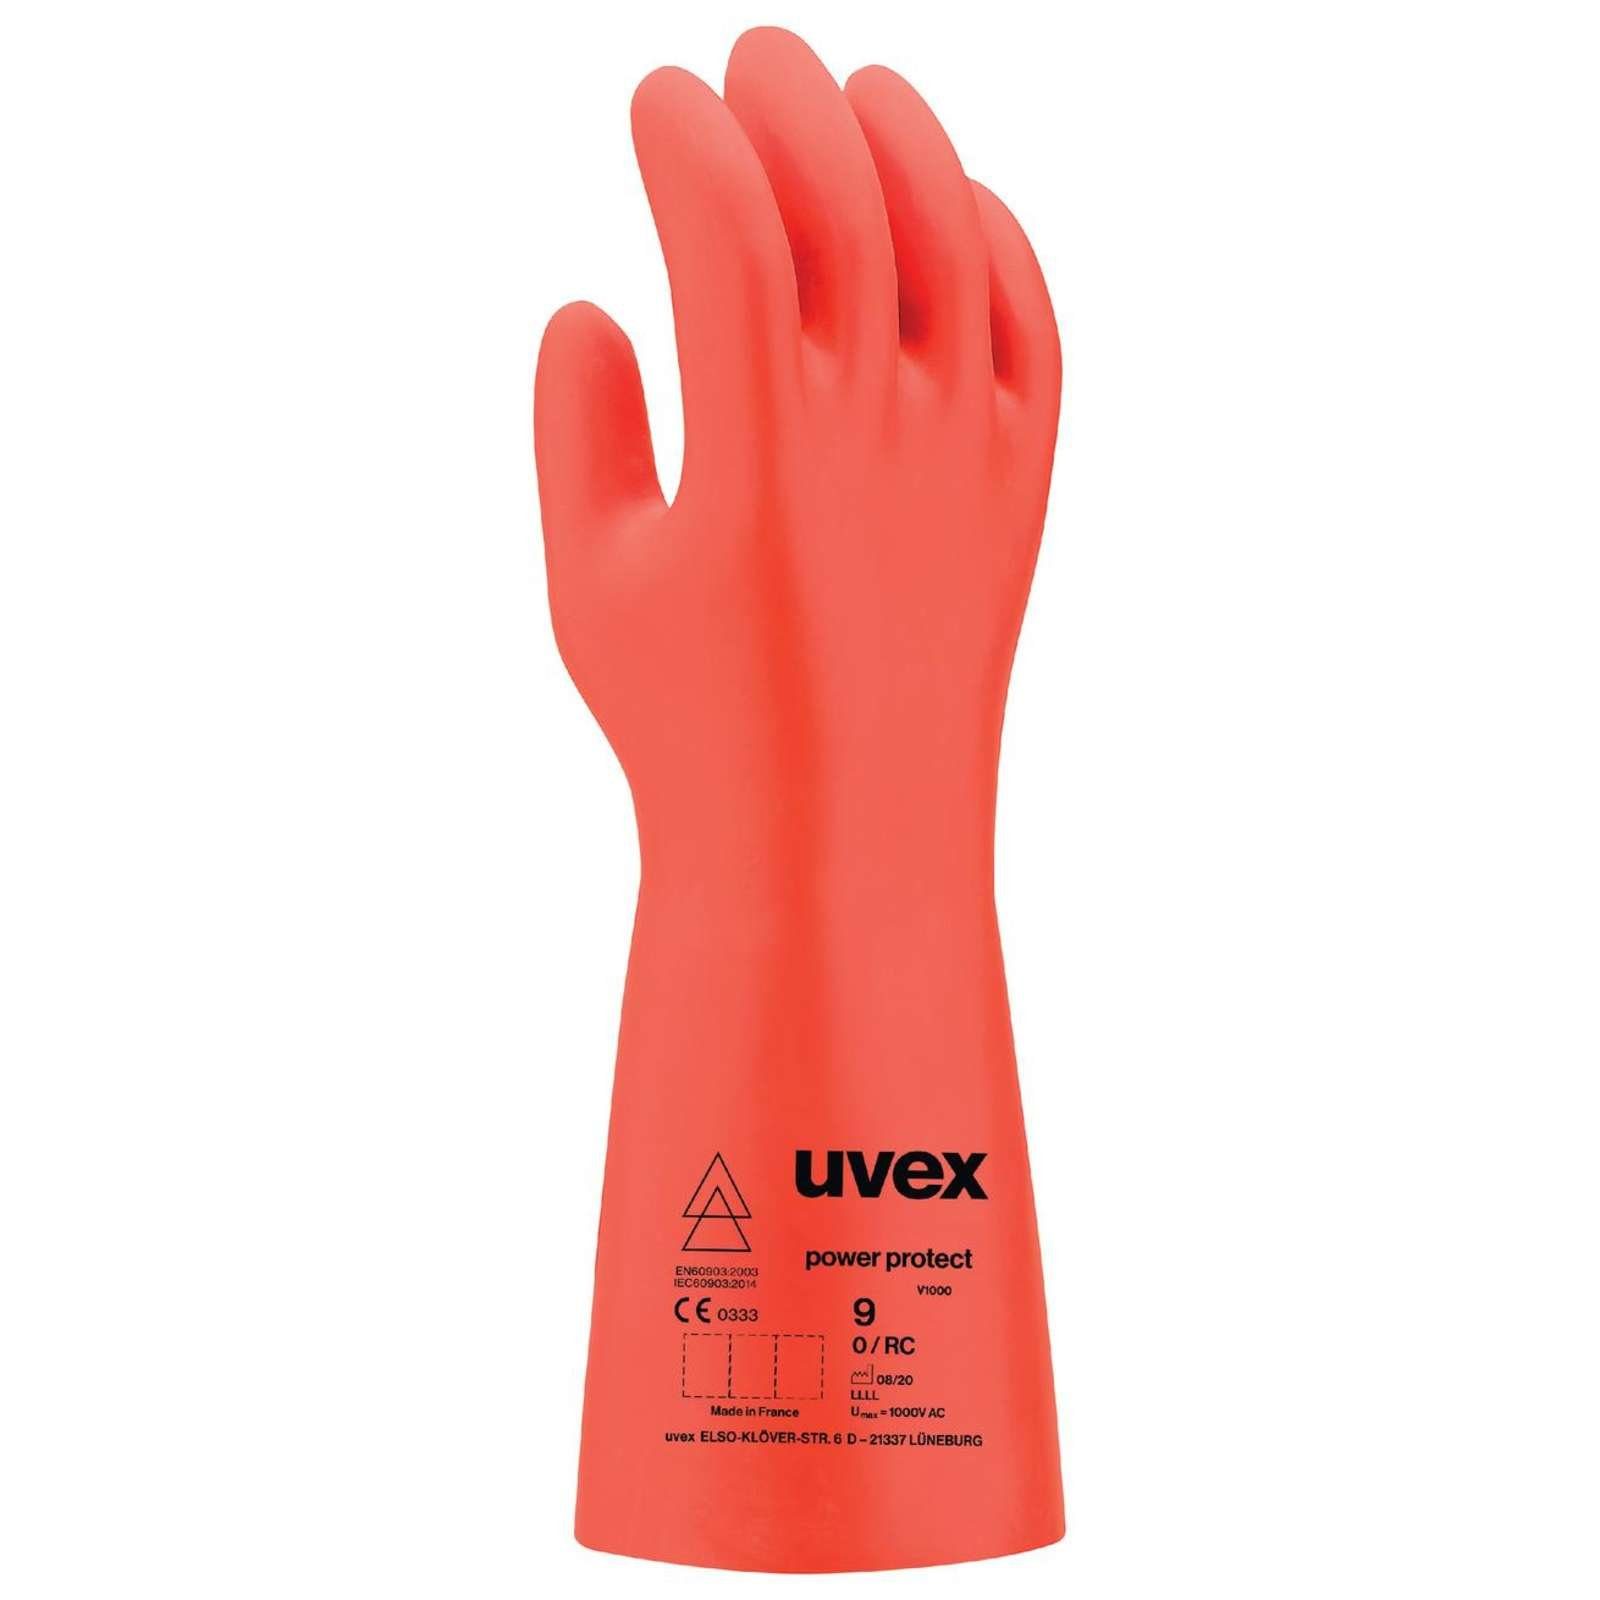 Uvex Mechaniker-Handschuhe uvex Latex V1000 power protect 60840 Elektriker-Schutzhandschuh (Spar-Set)